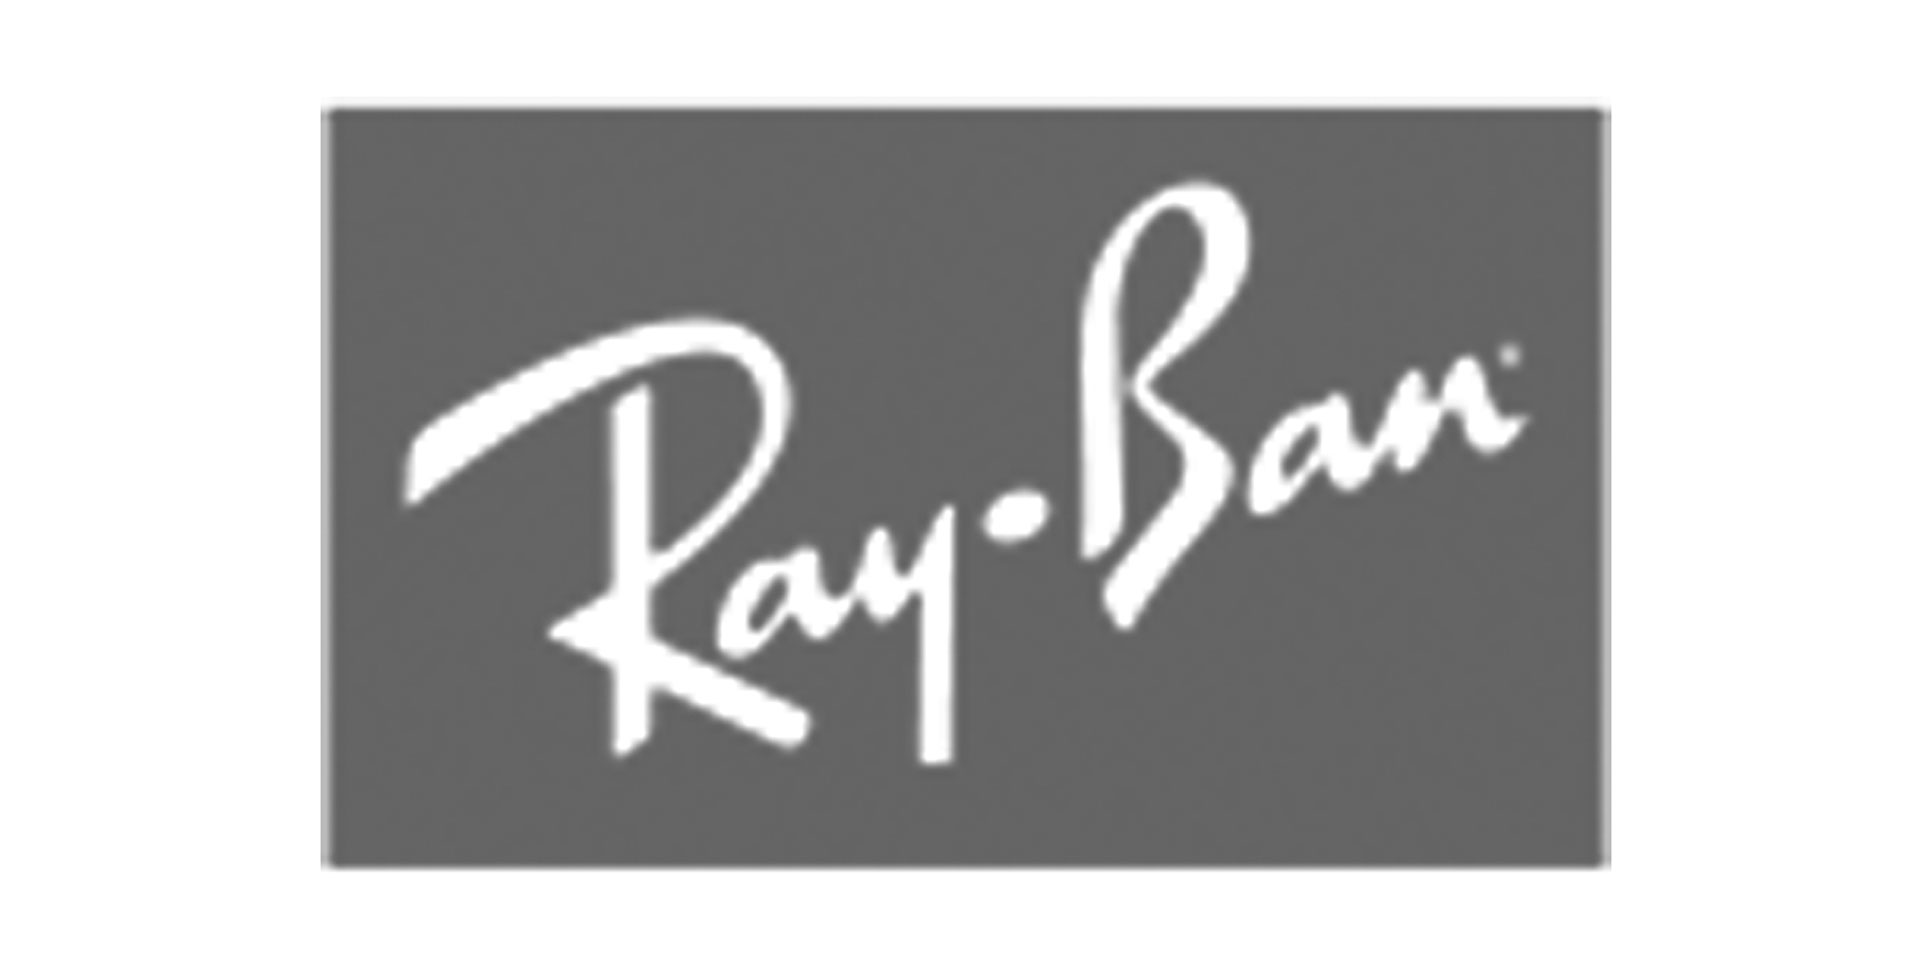 Buy Ray-Ban Wayfarer Liteforce Sunglasses Online.